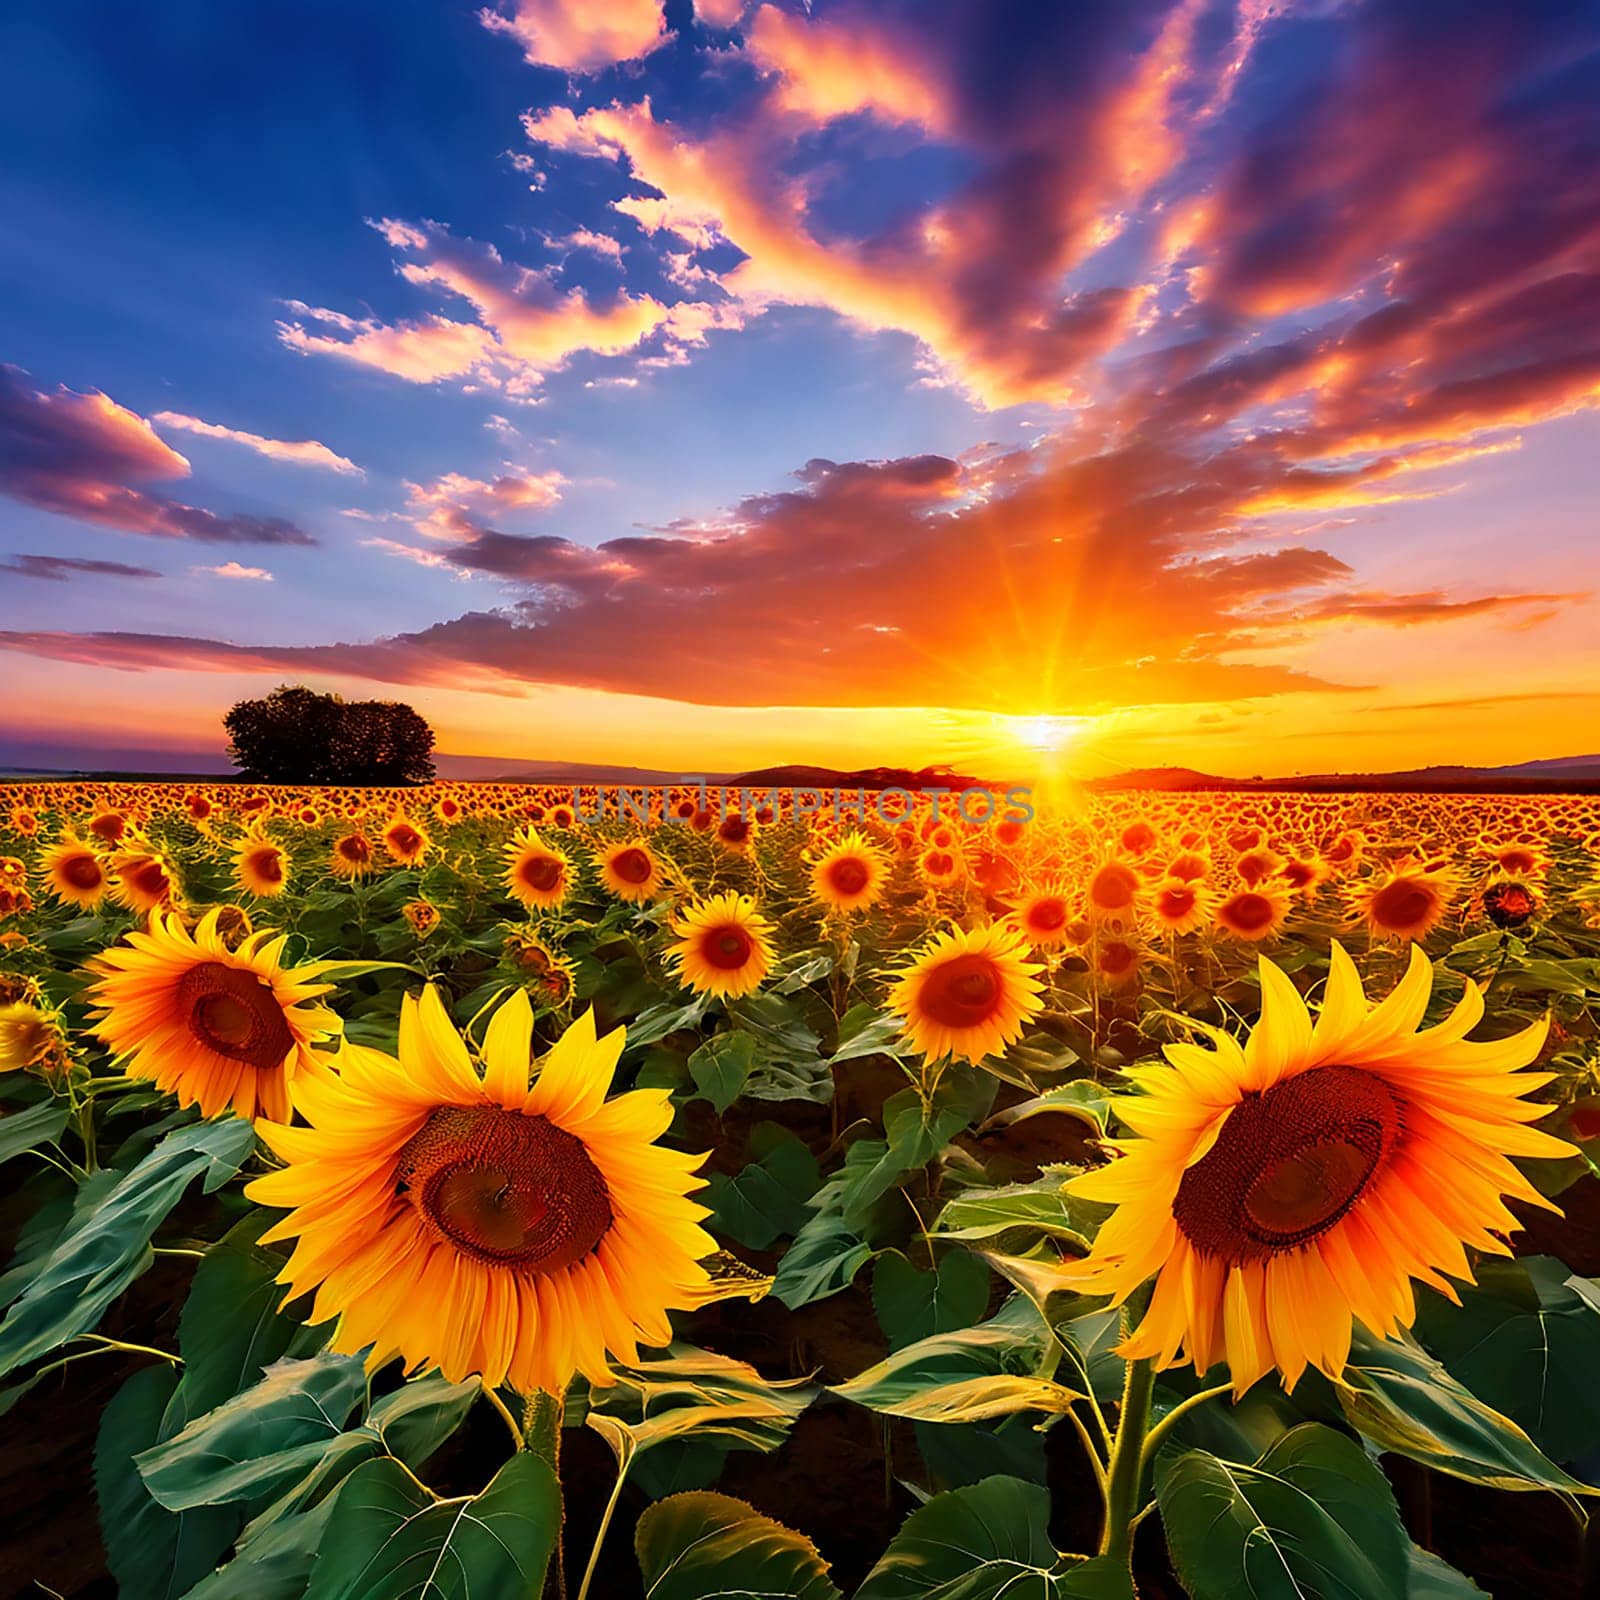 Awe-Inspiring Nature Landscape of a Sunflower Field by Petrichor